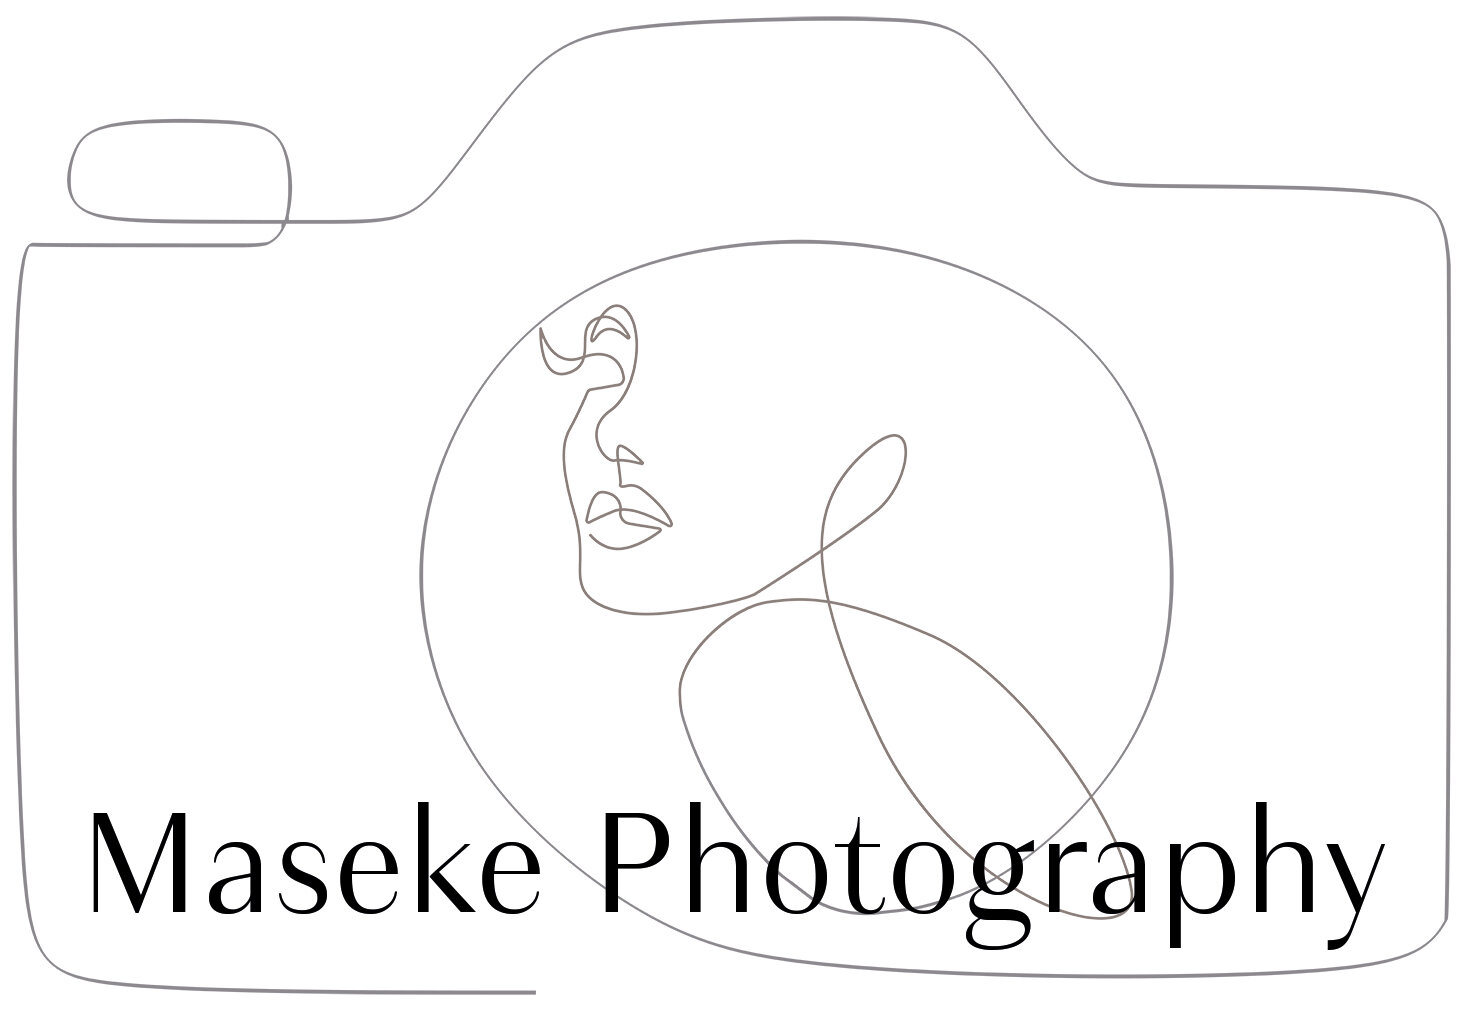 Maseke Photography